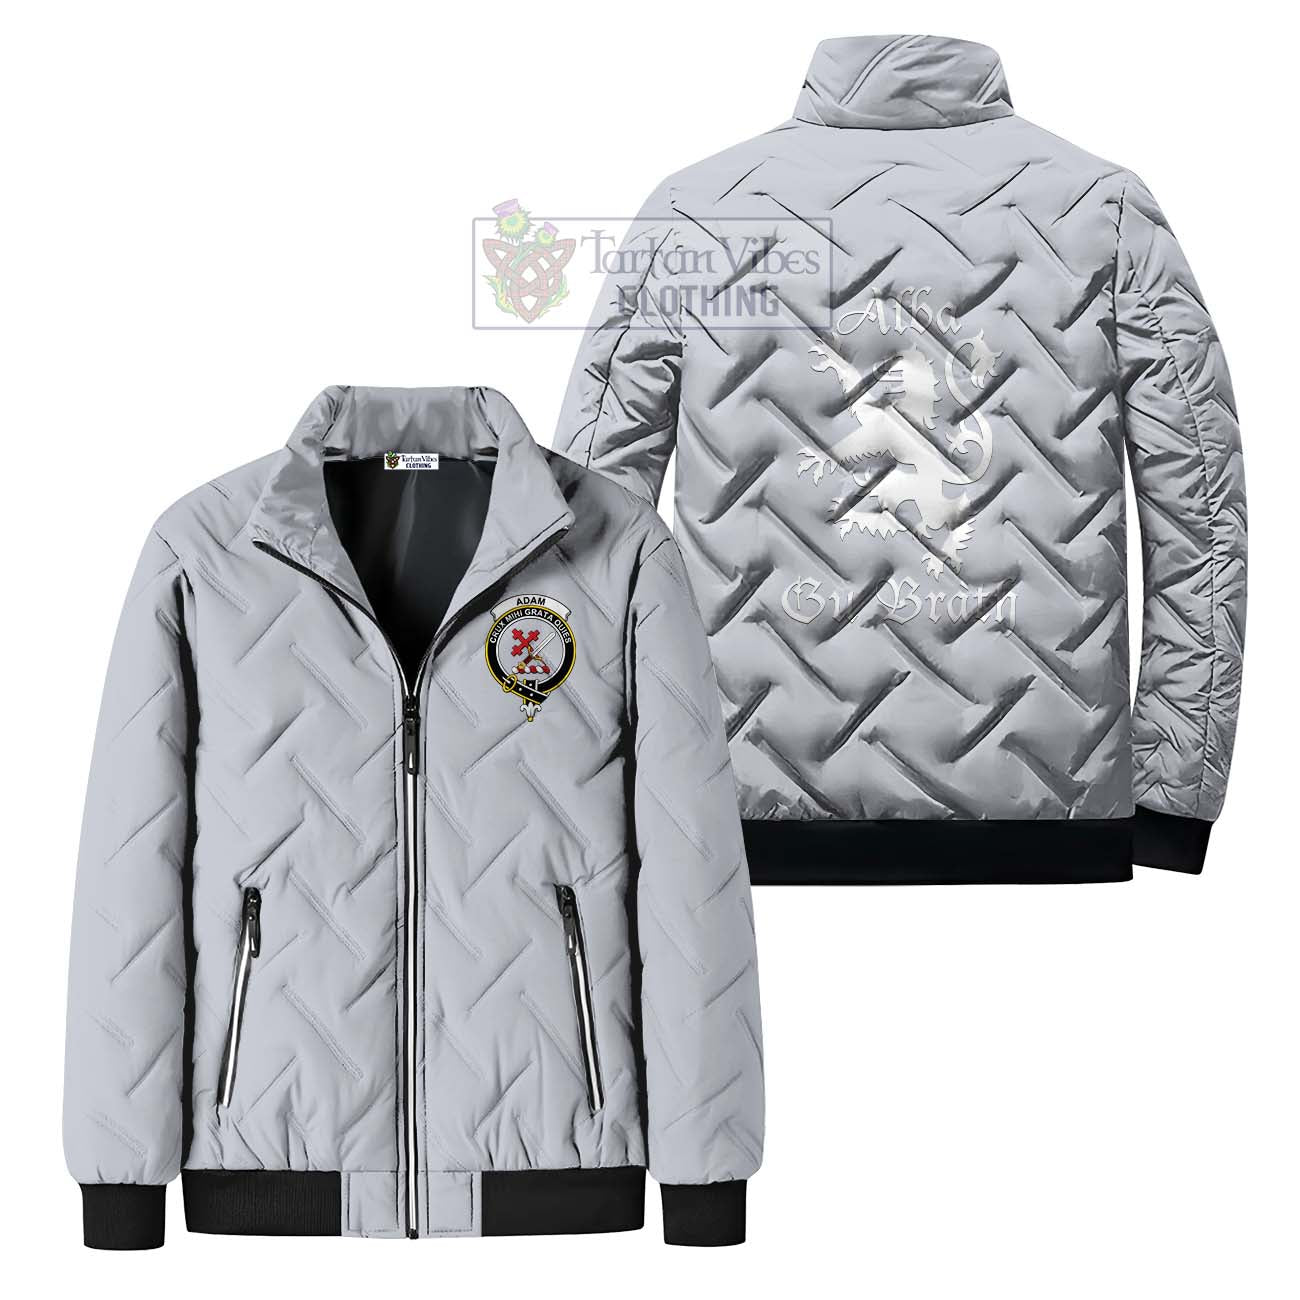 Tartan Vibes Clothing Adam Family Crest Padded Cotton Jacket Lion Rampant Alba Gu Brath Style